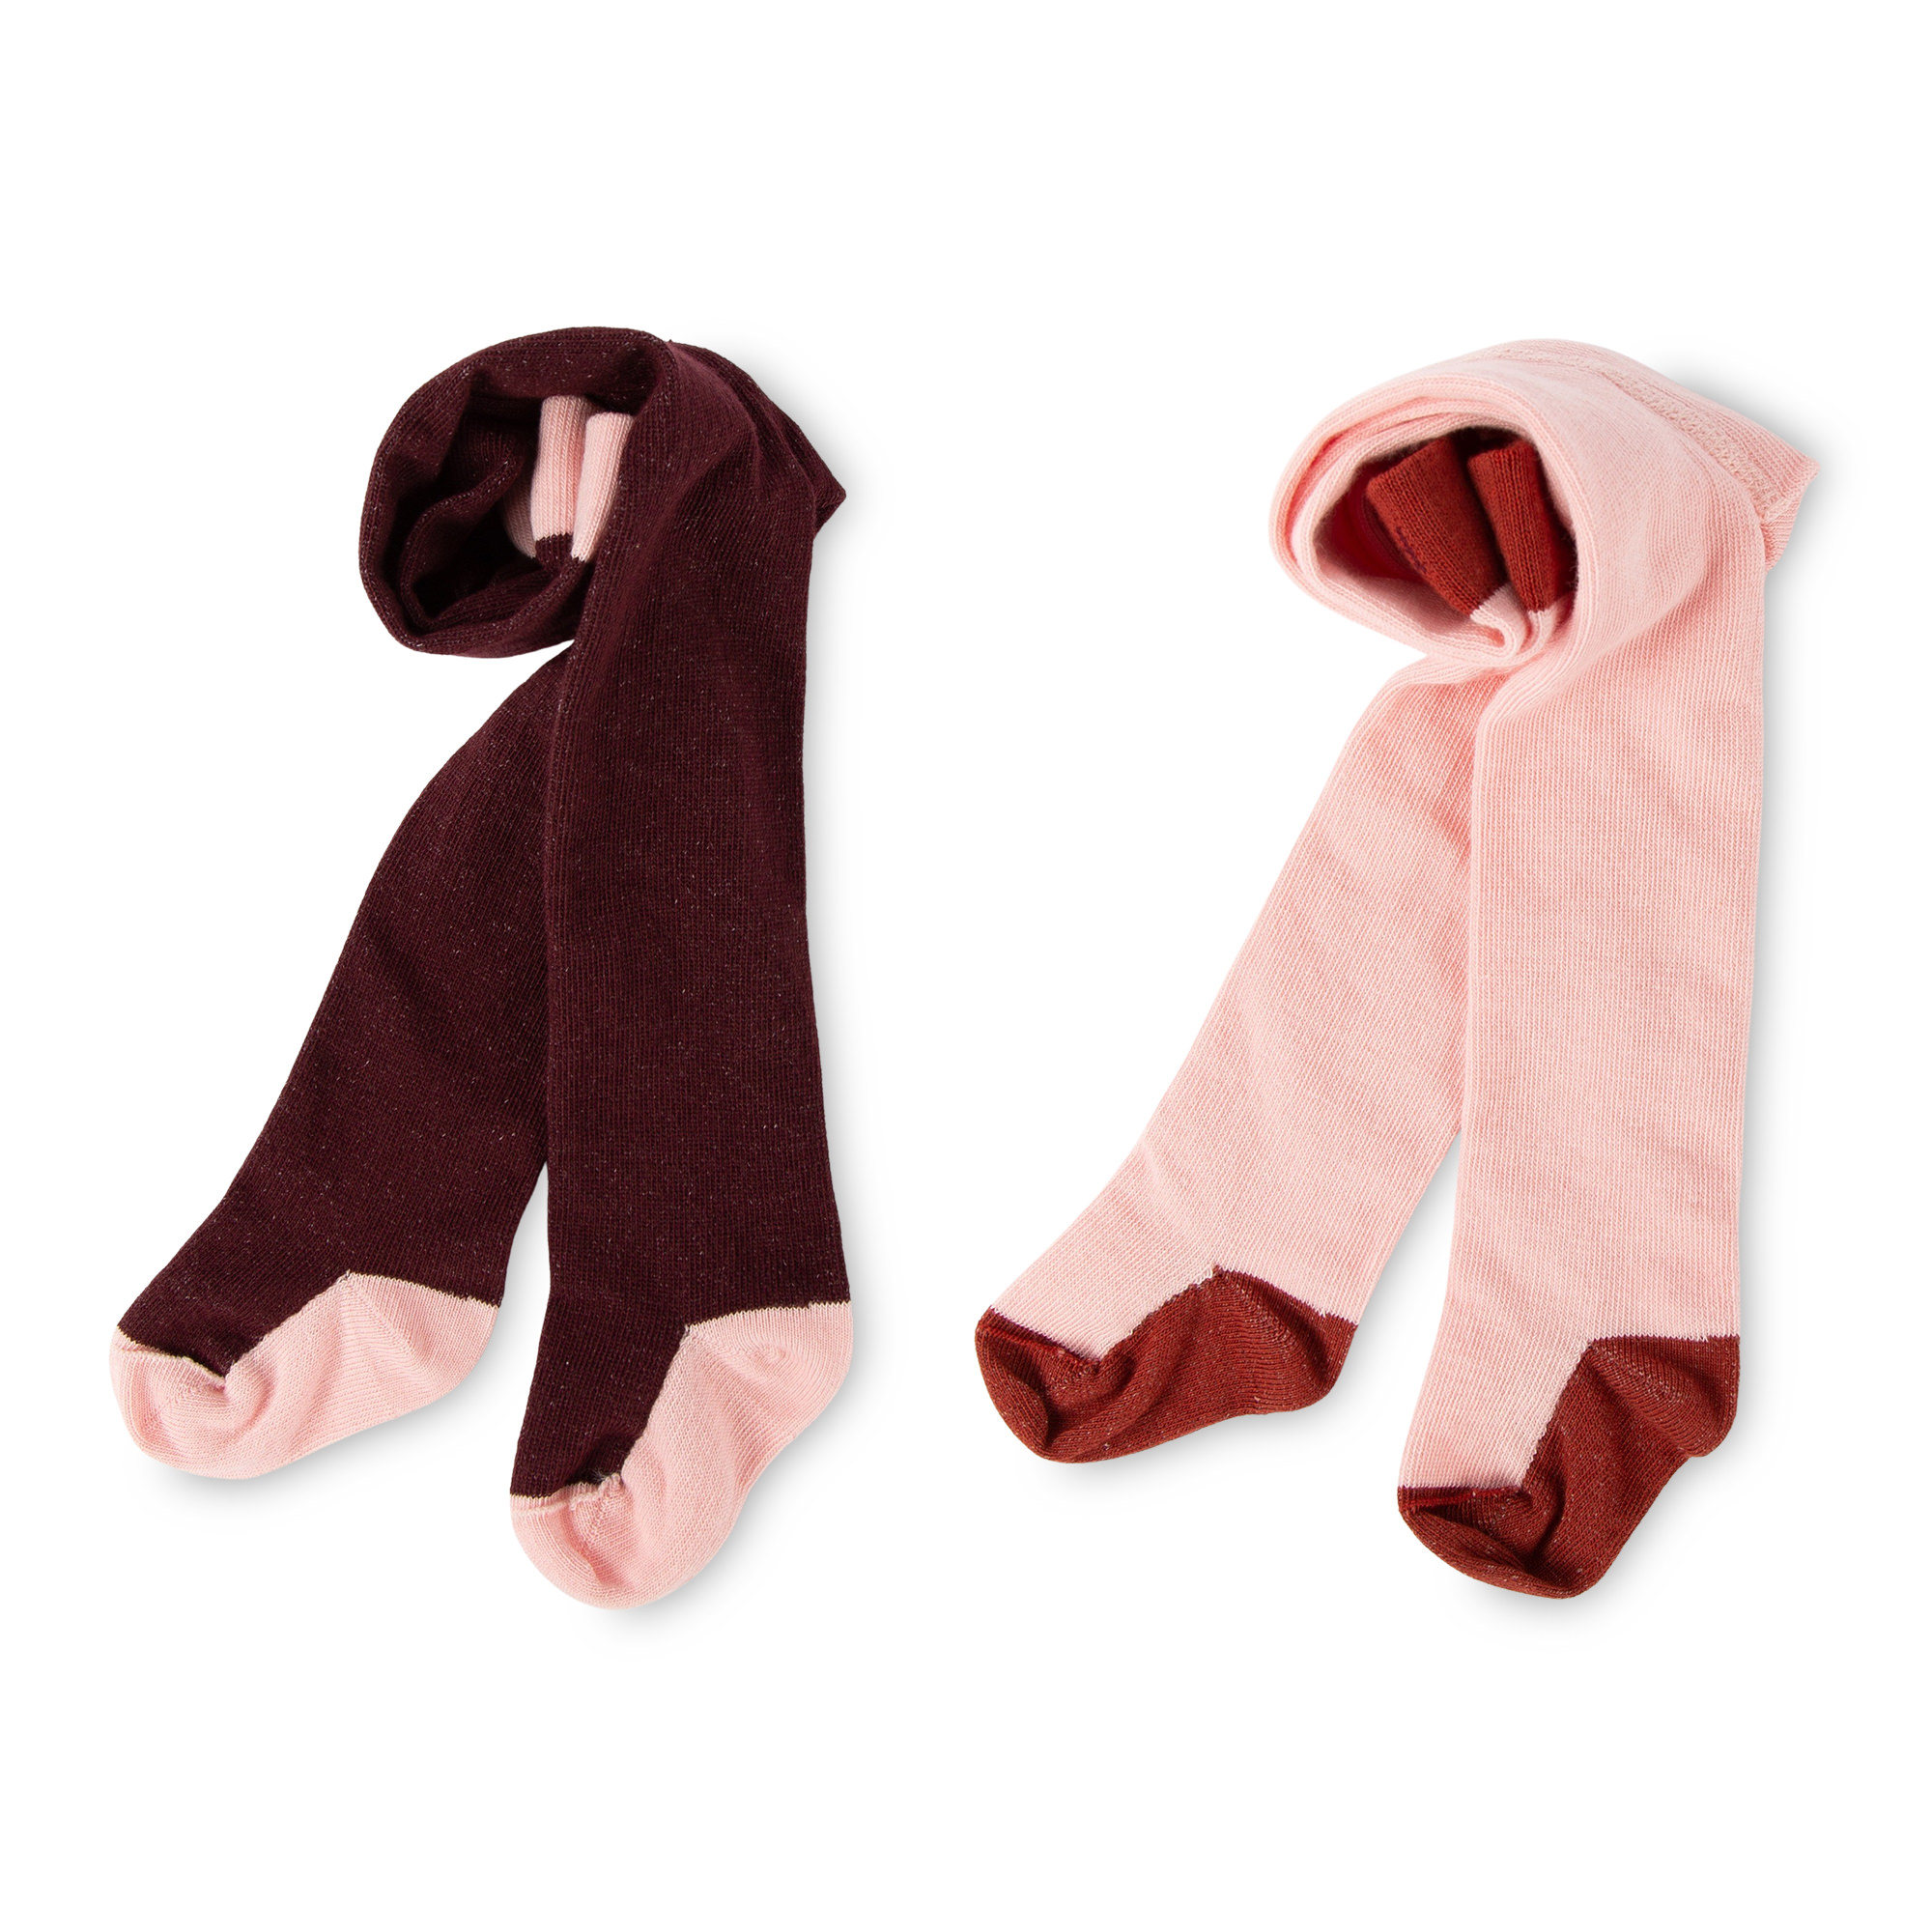 2 pair set baby tights pink/burgundy